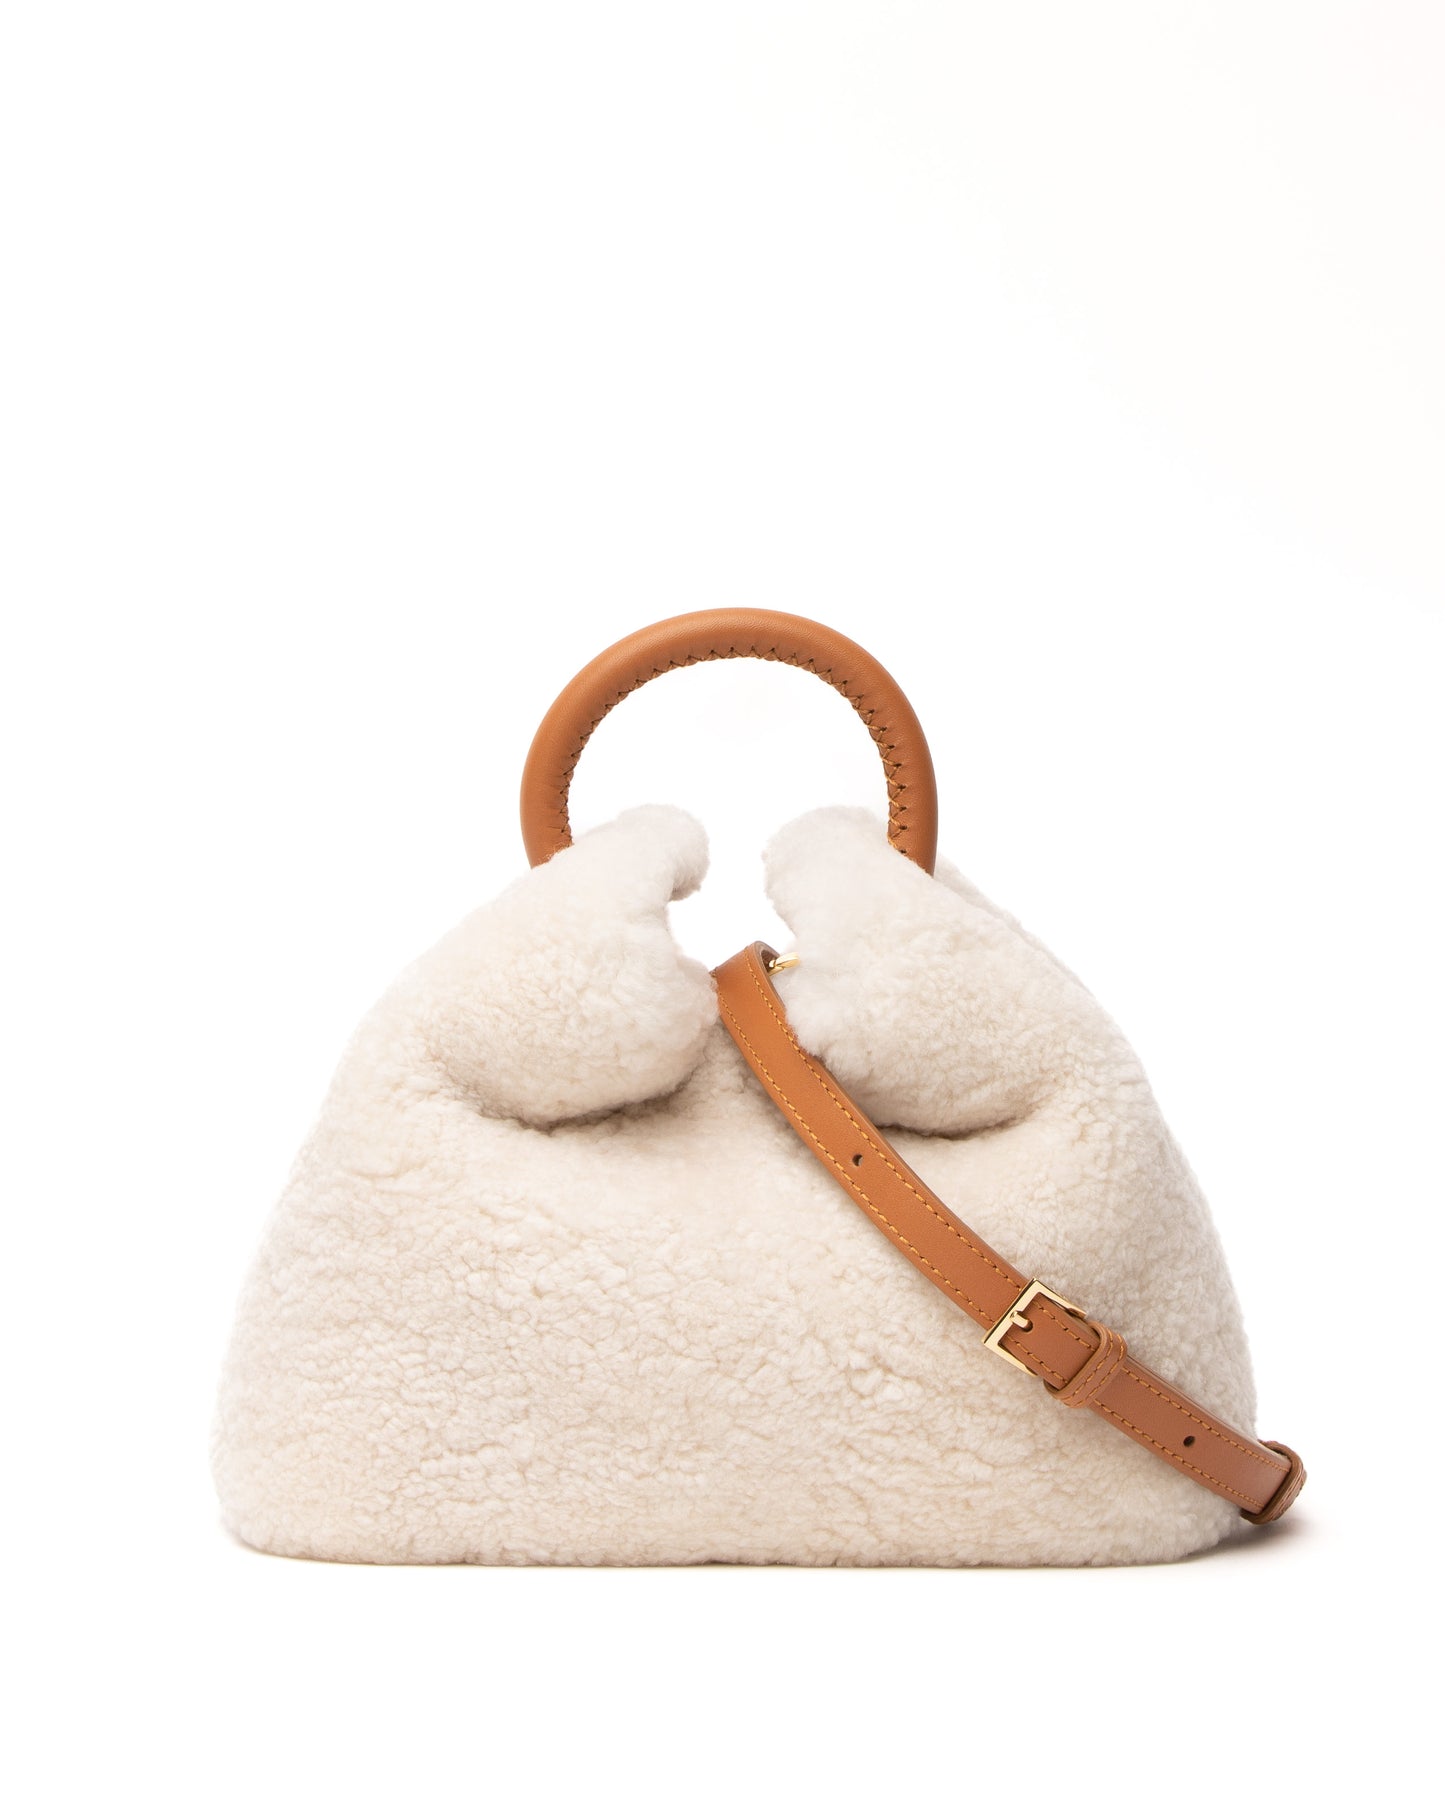 Baozi Shearling Teddy White/Caramel Bag